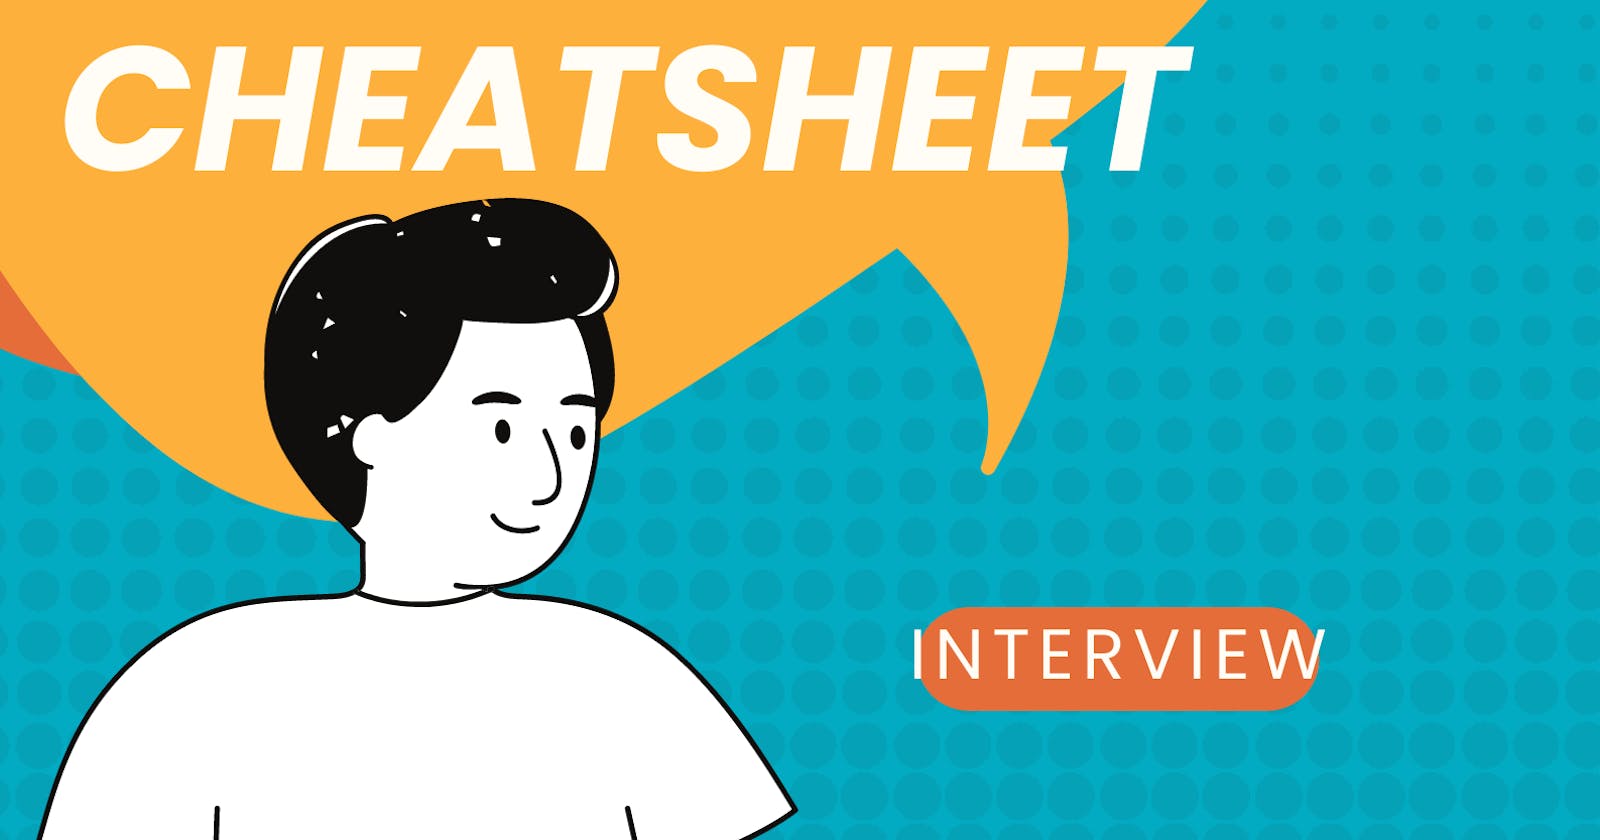 JavaScript Interview Preparation Cheatsheet